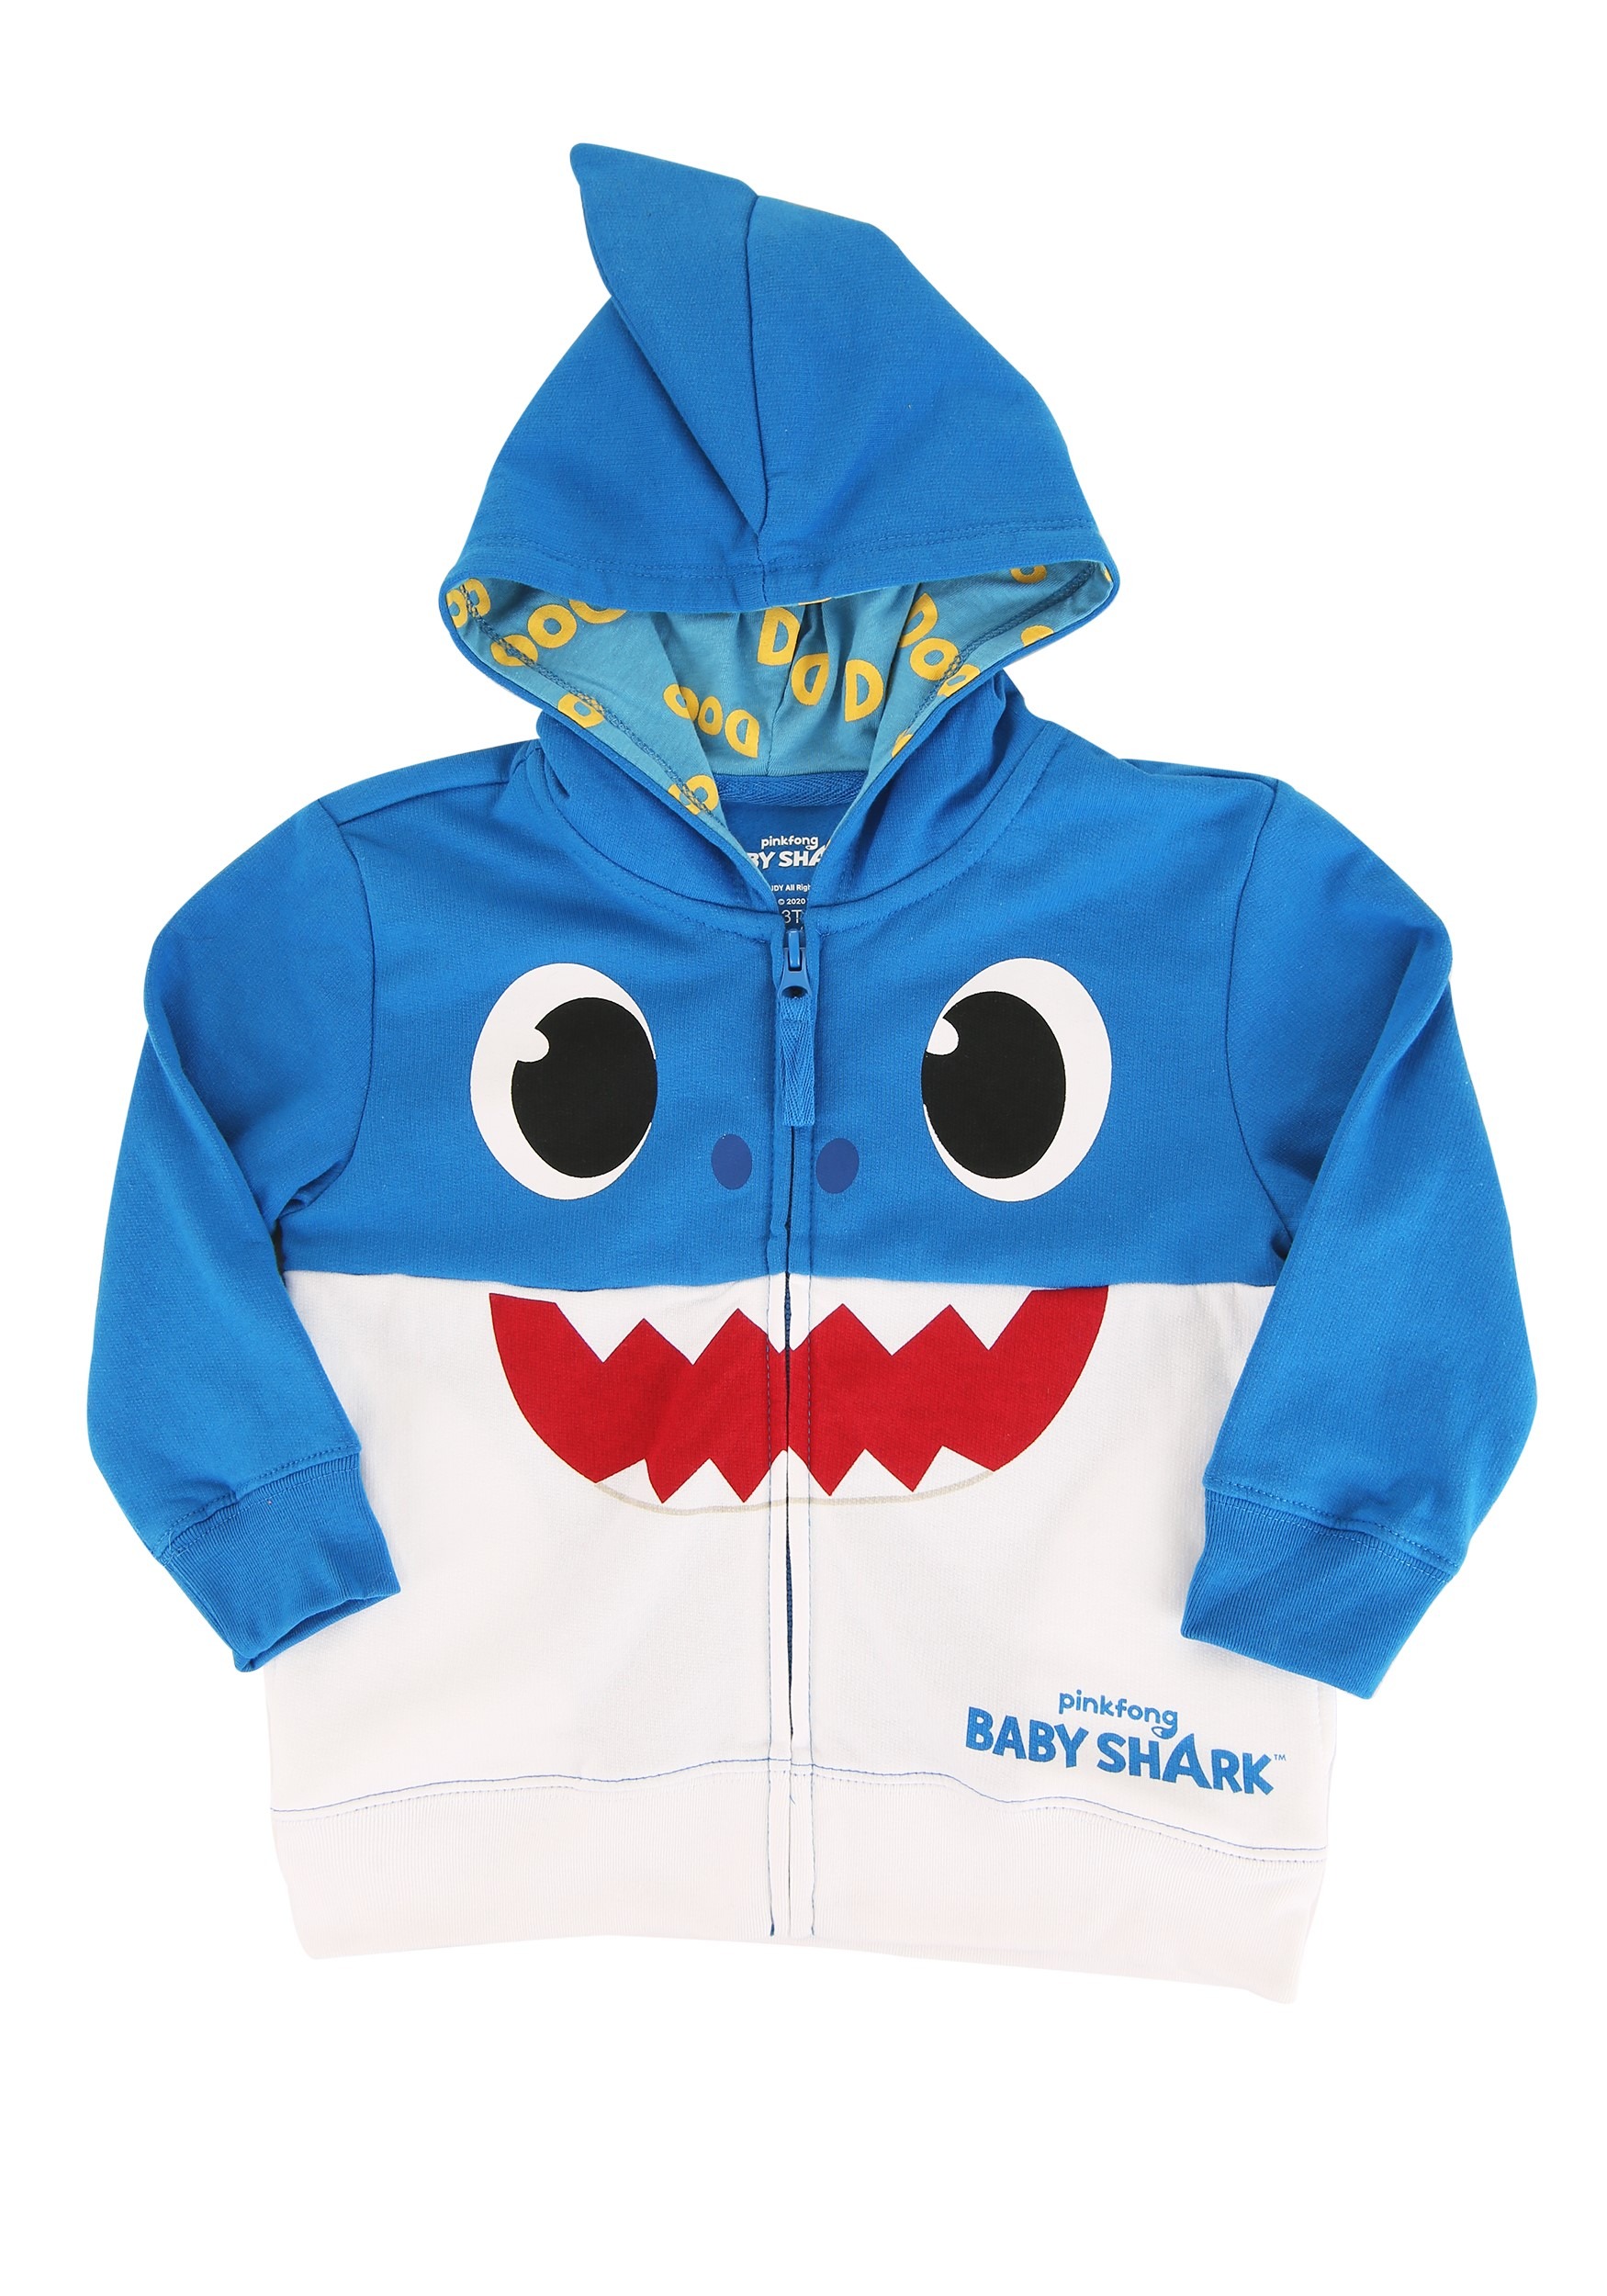 Toddler Baby Shark Blue Hoodie Costume